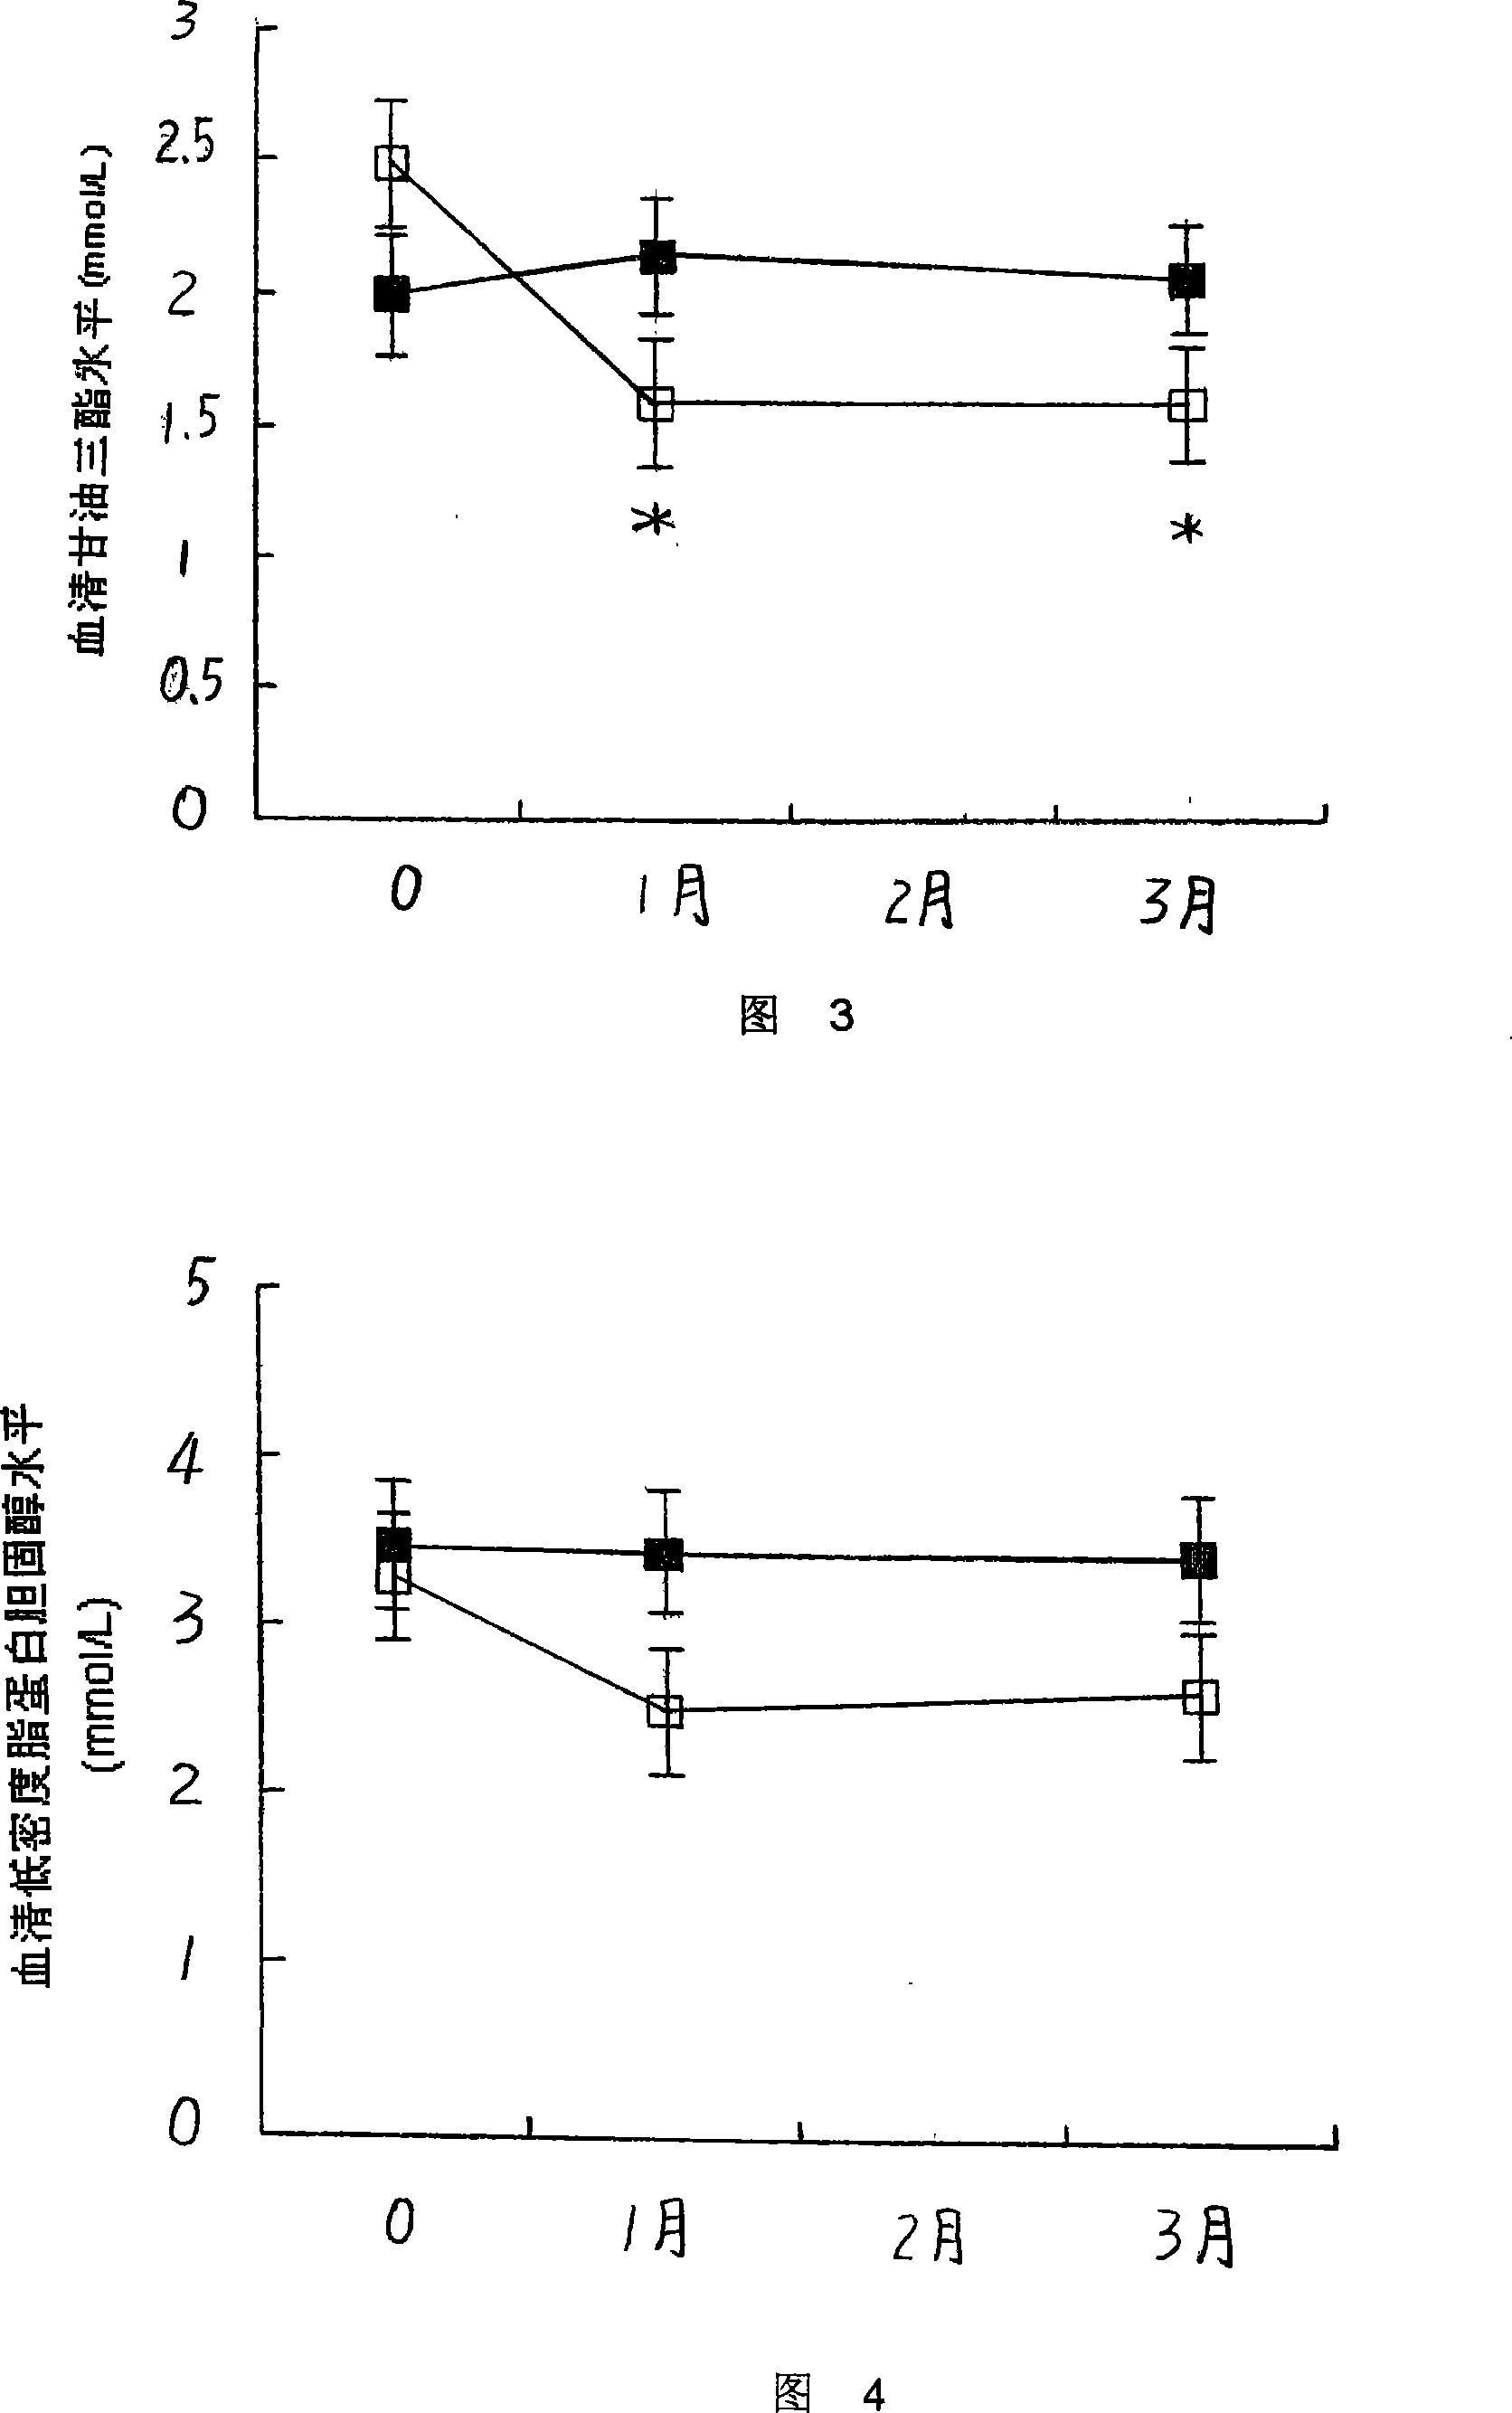 Use of berberine in treating metabolism complex